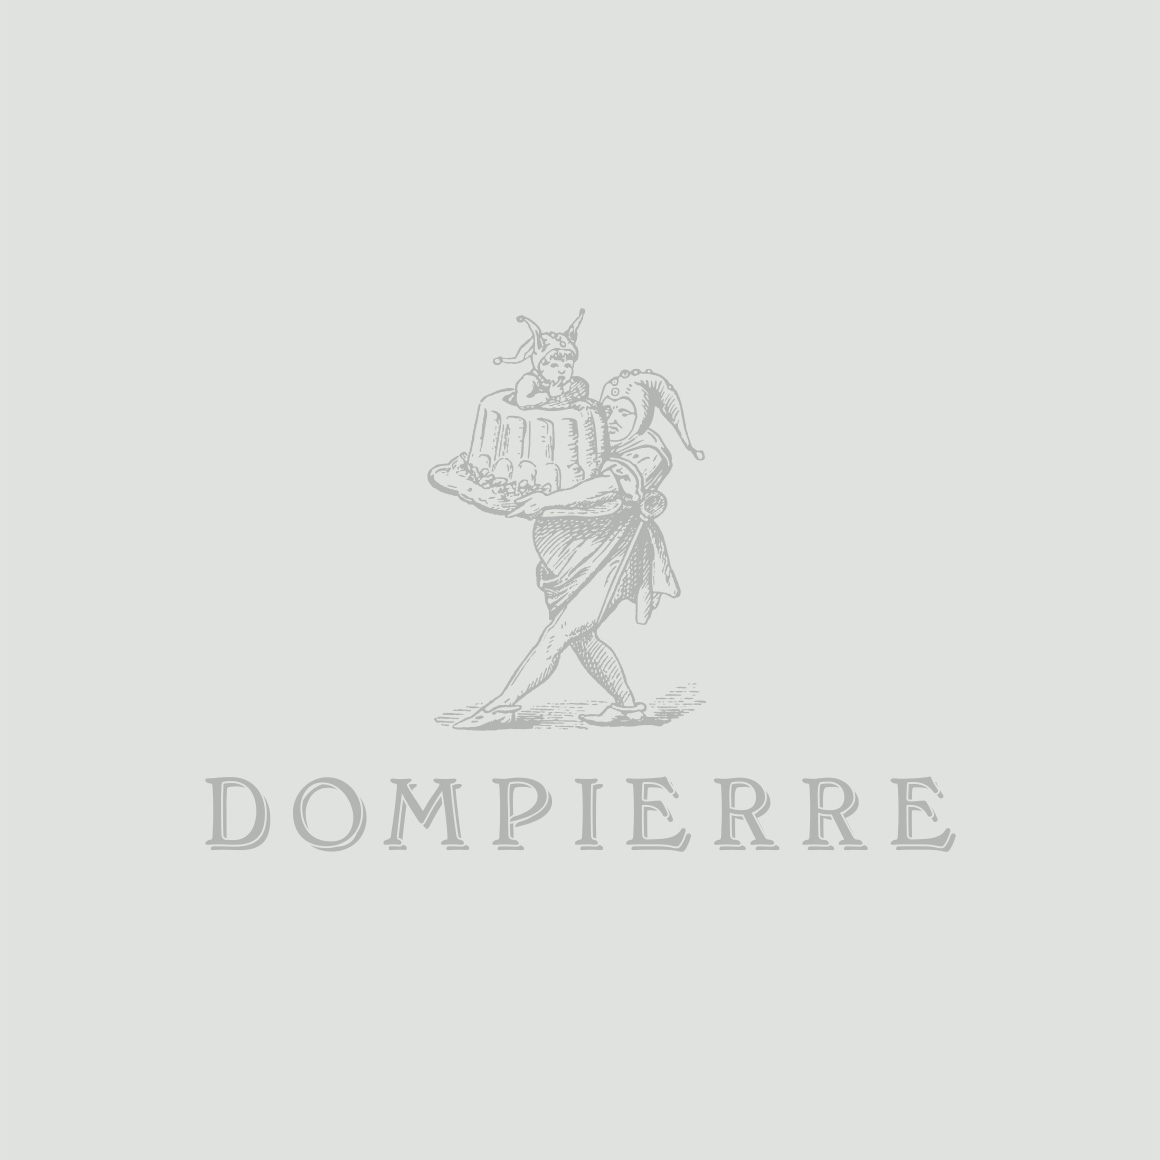 (c) Dompierre.de